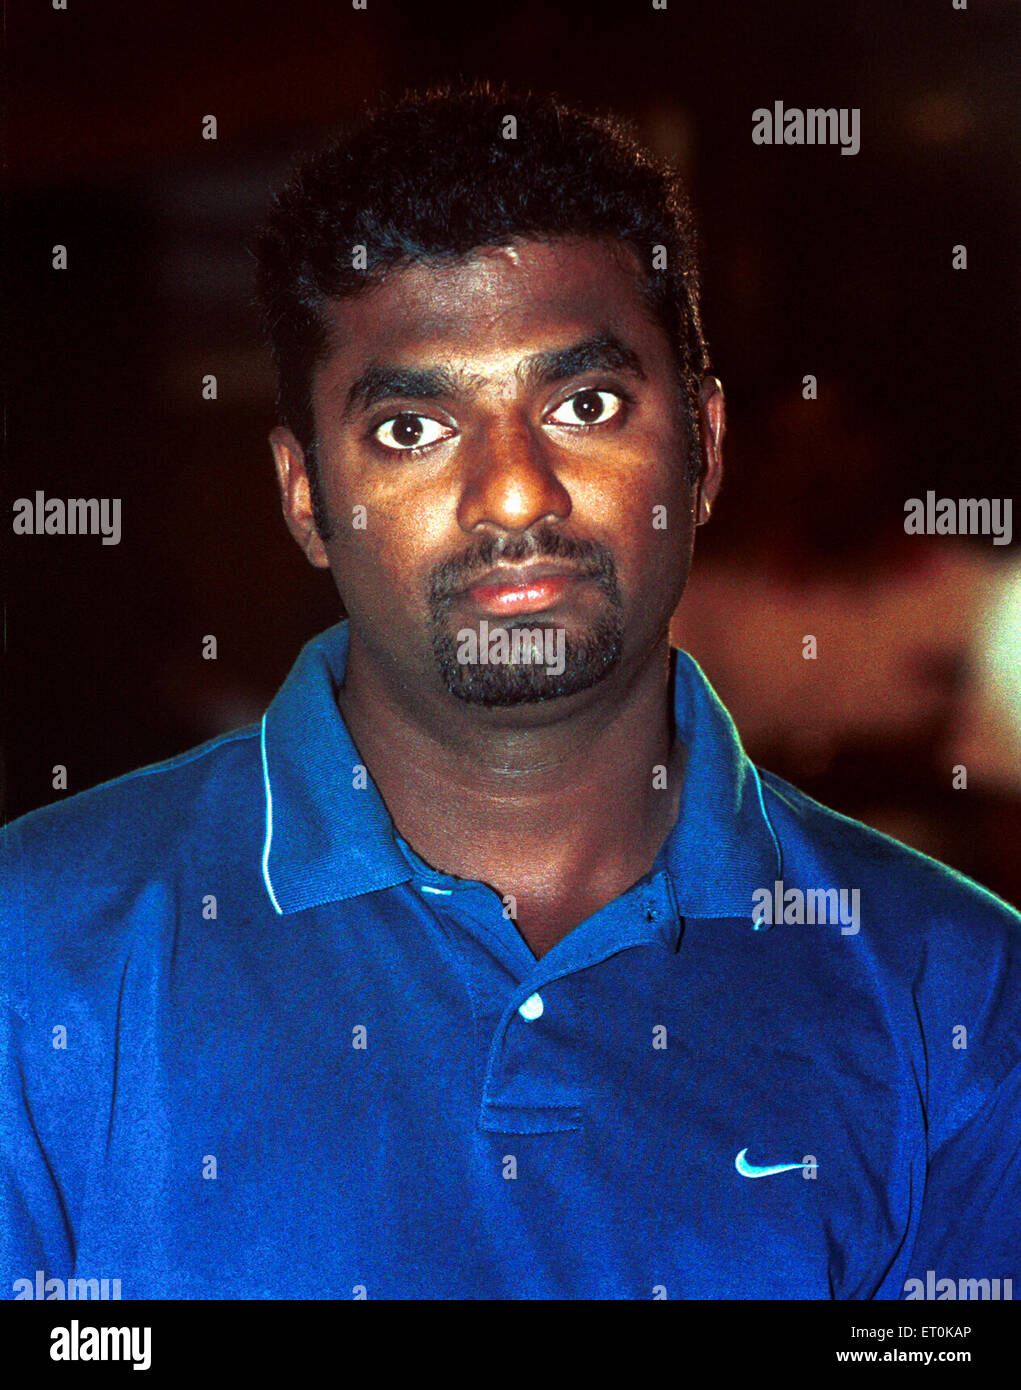 Deshabandu Muttiah Muralitharan, Sri Lankan, cricket coach, professional cricketer, businessman, ICC Cricket Hall of Fame member Stock Photo